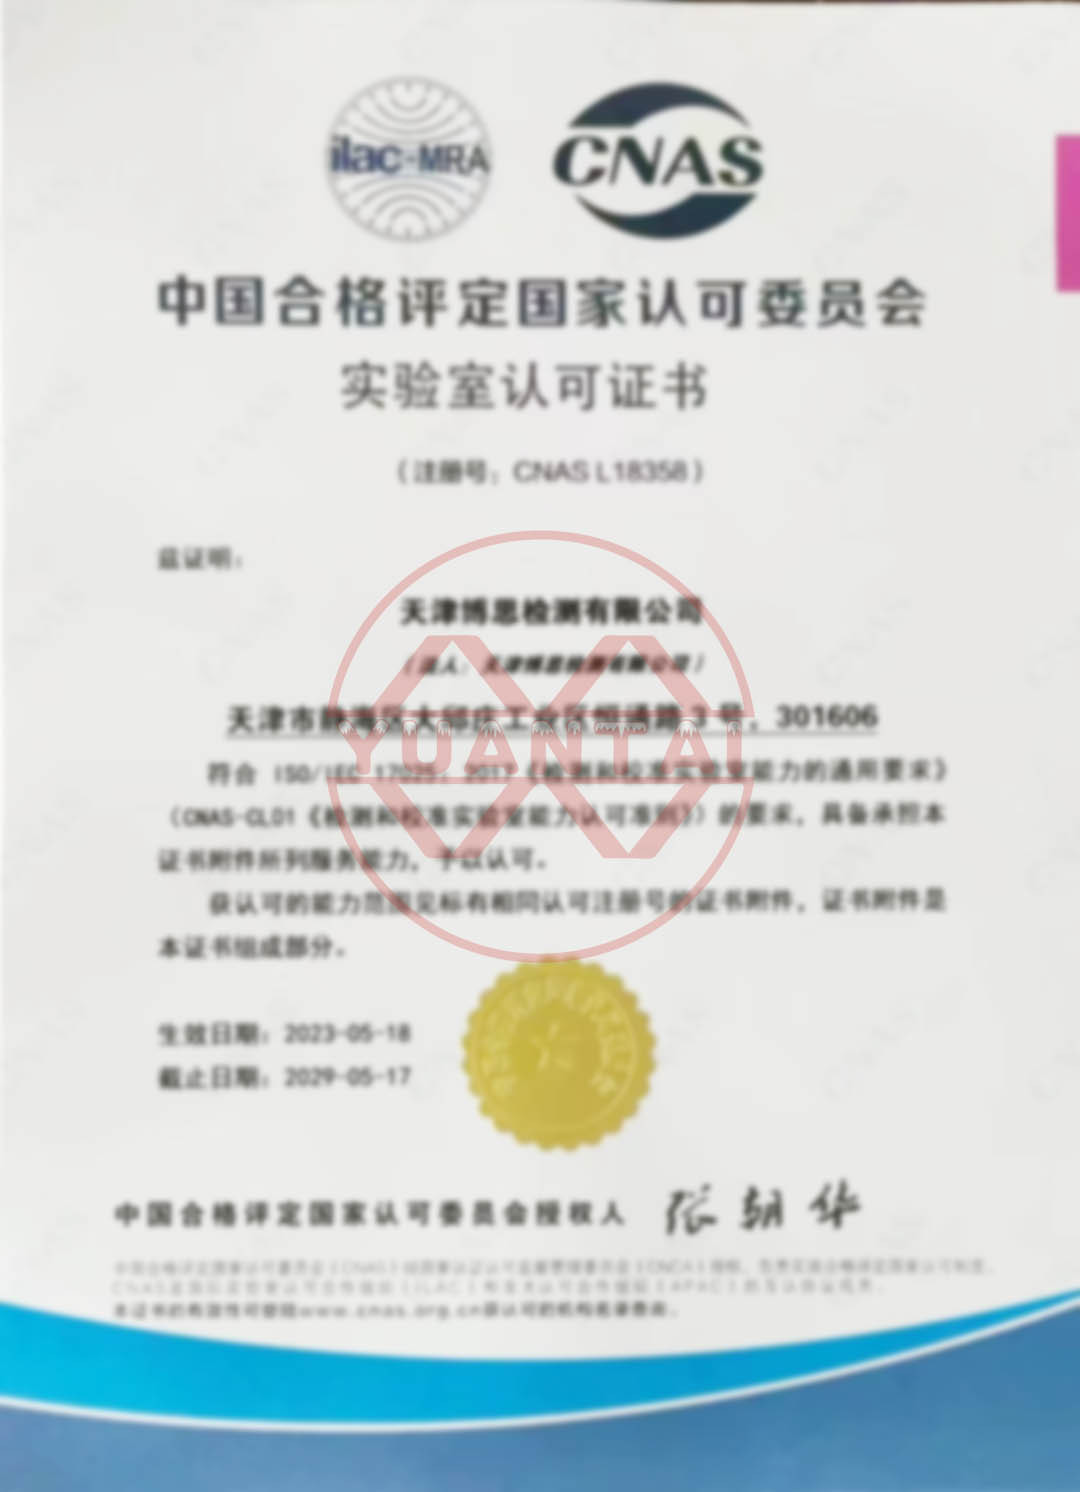 CNAS certification